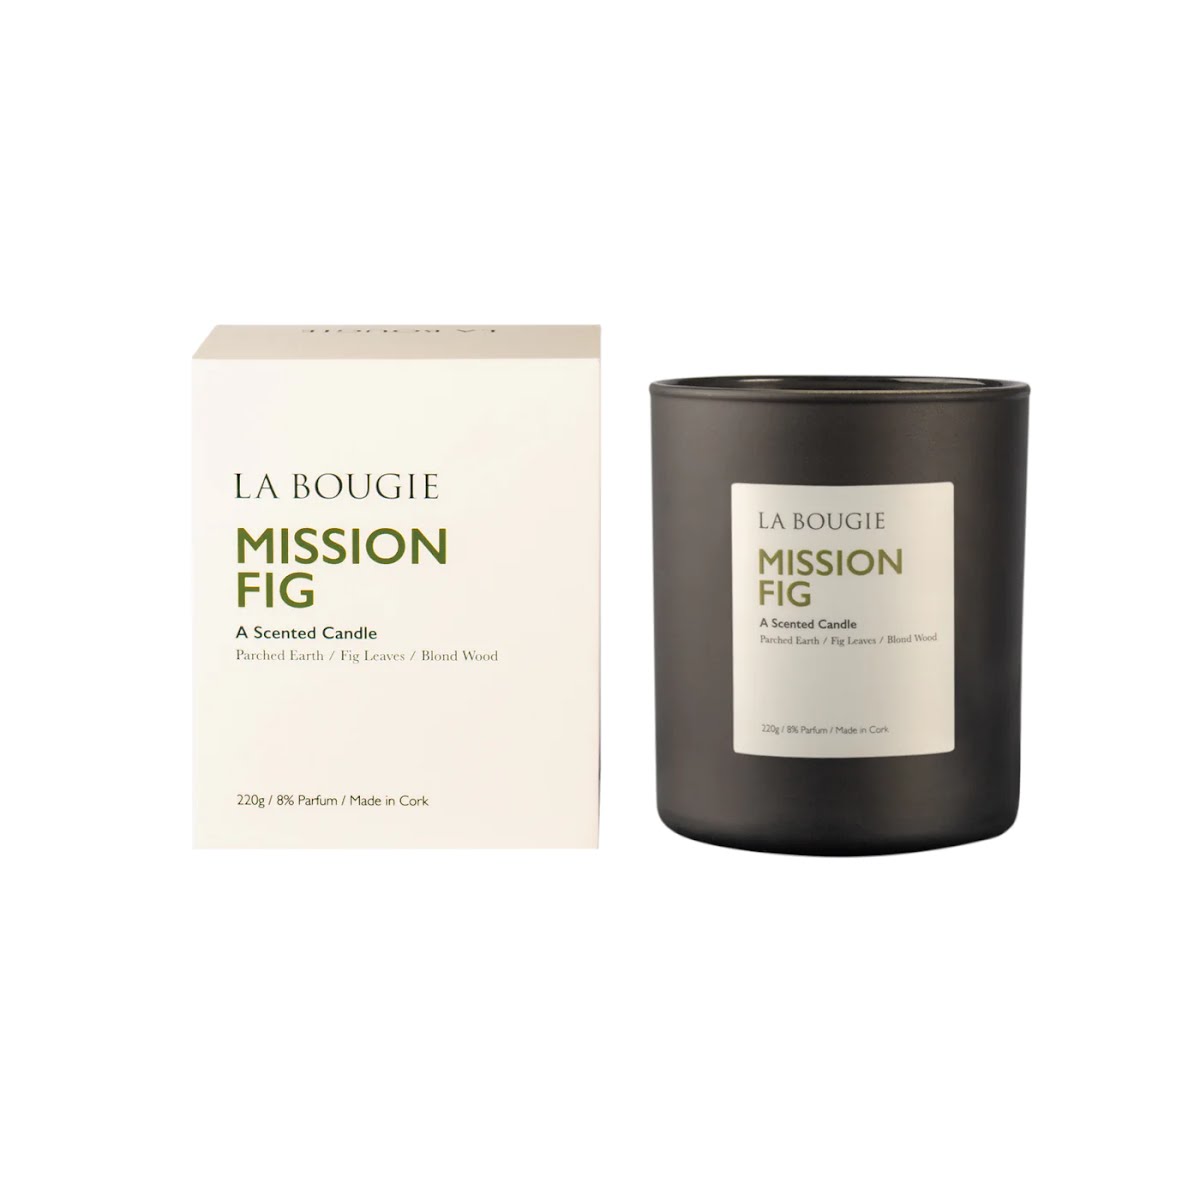 La Bougie Mission Fig Candle, €30